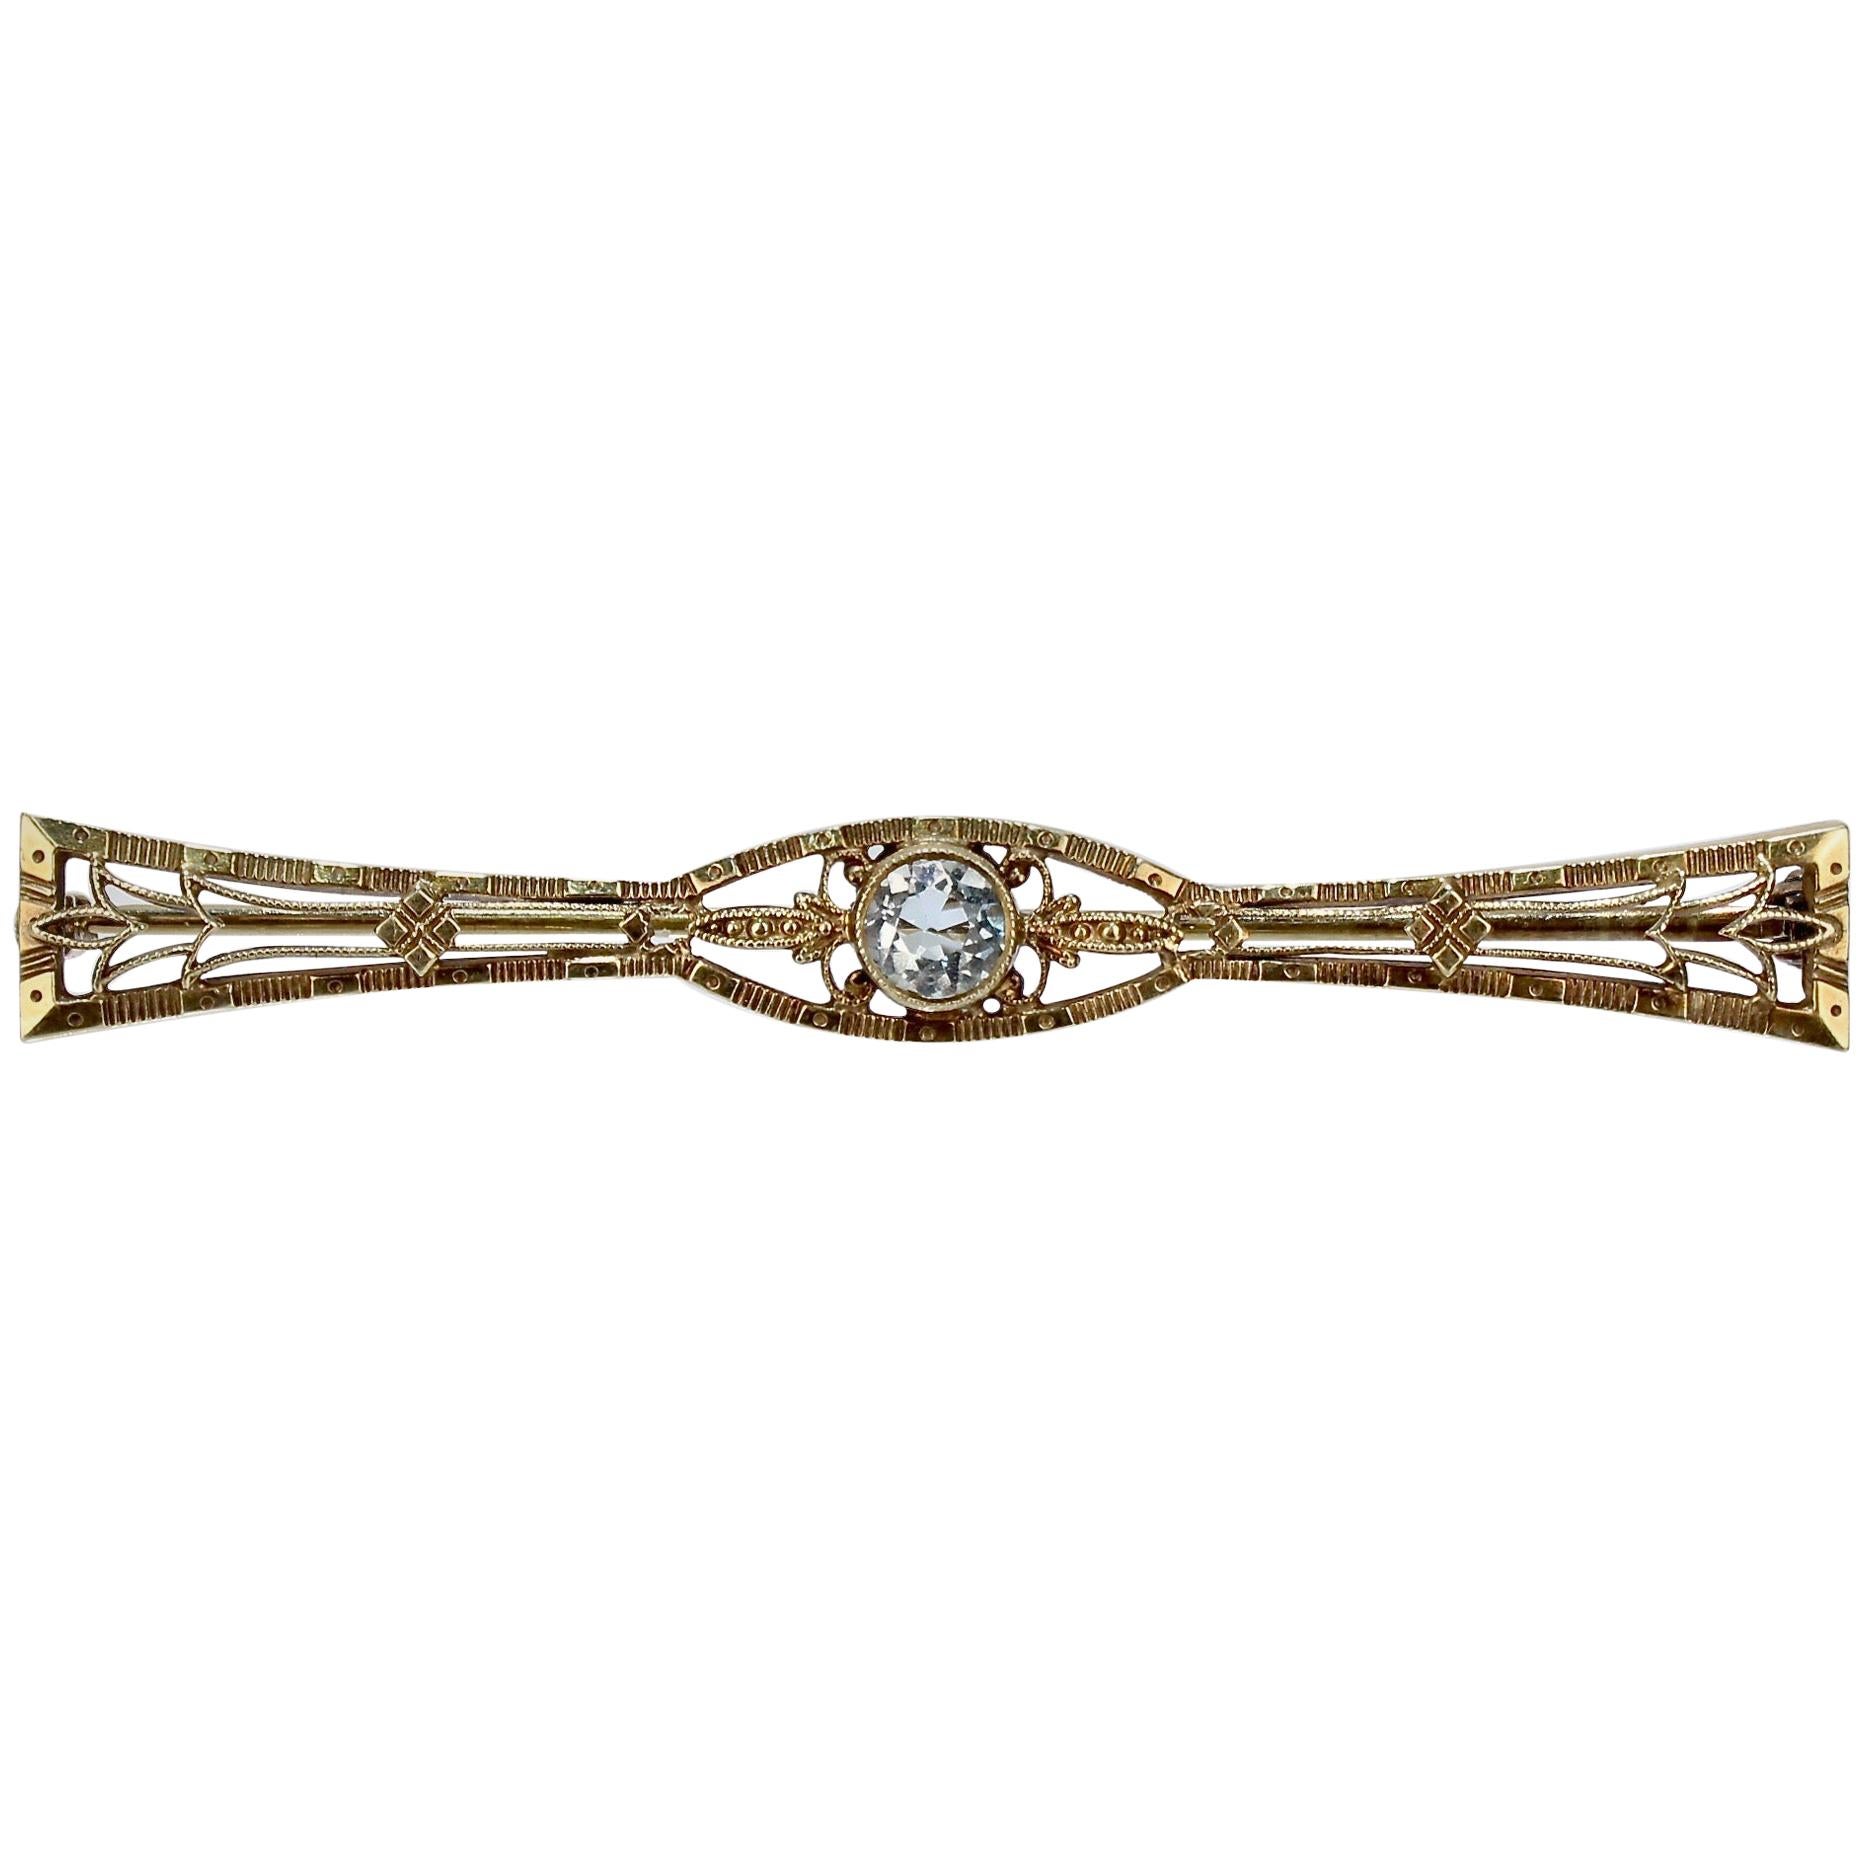 Edwardian 14 Karat Gold and Aquamarine Filigree Bow Tie Brooch or Pin